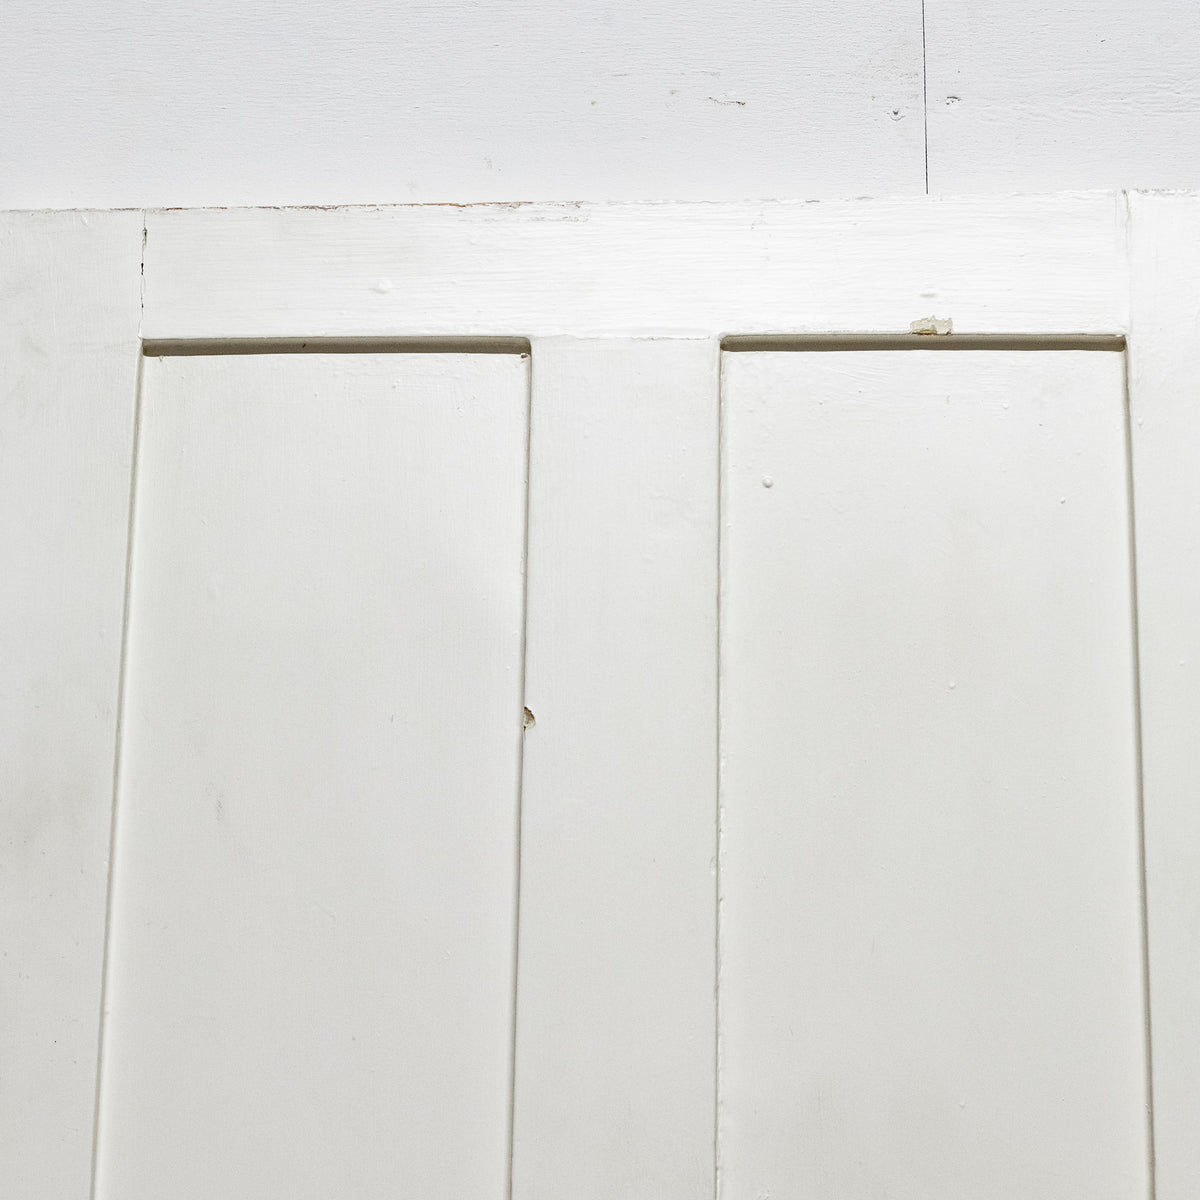 Antique Reclaimed Victorian 4 Panel Door - 196cm x 73cm | The Architectural Forum